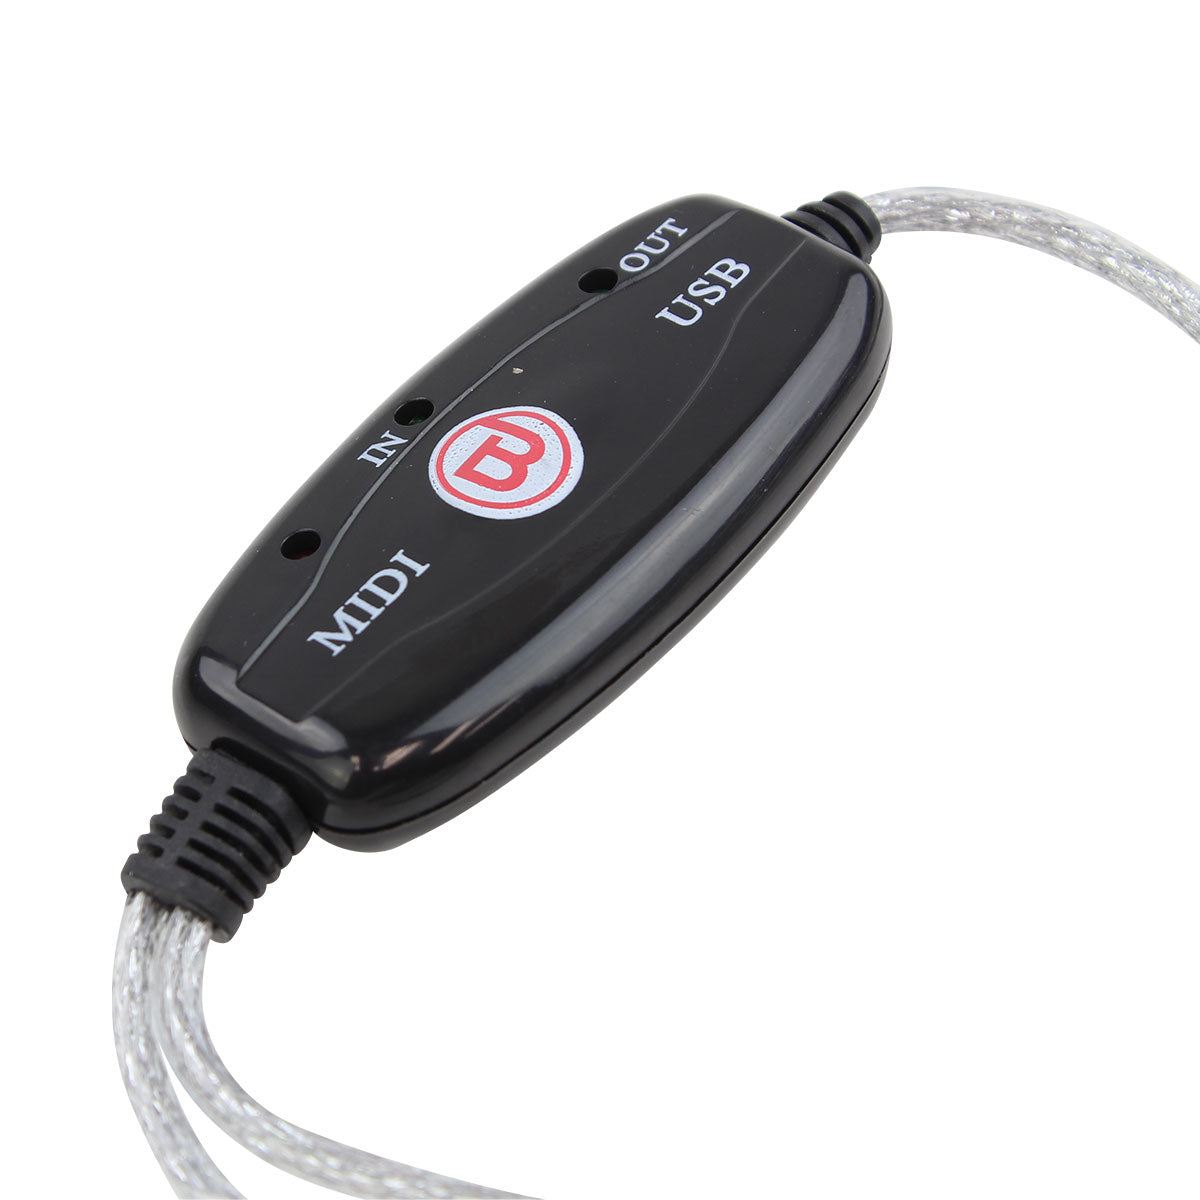 Blastking MIDI to USB Interface Cable – CMIDI-USB